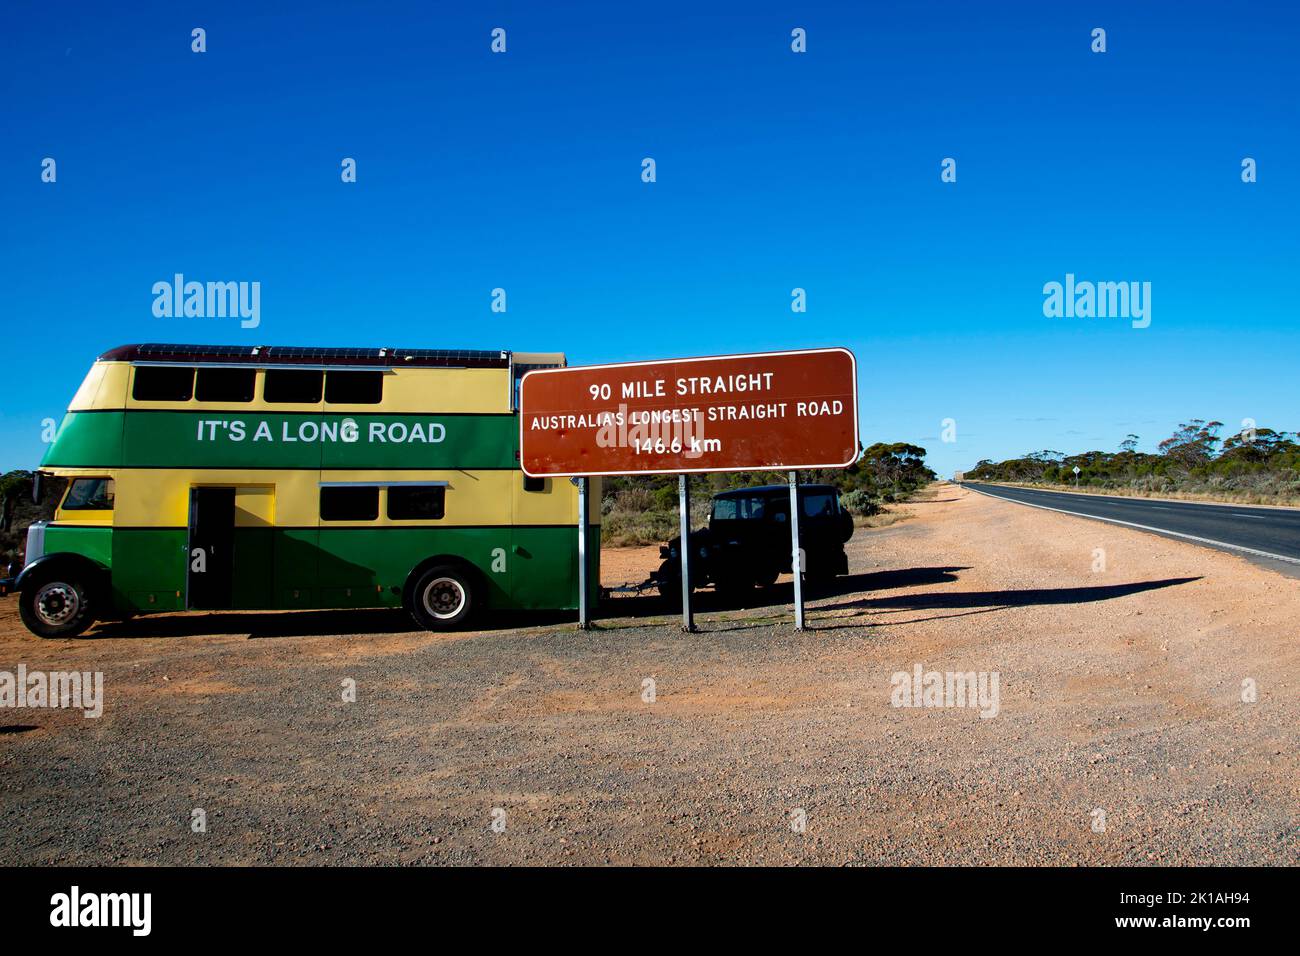 The Longest Straight Road in Australia Stock Photo